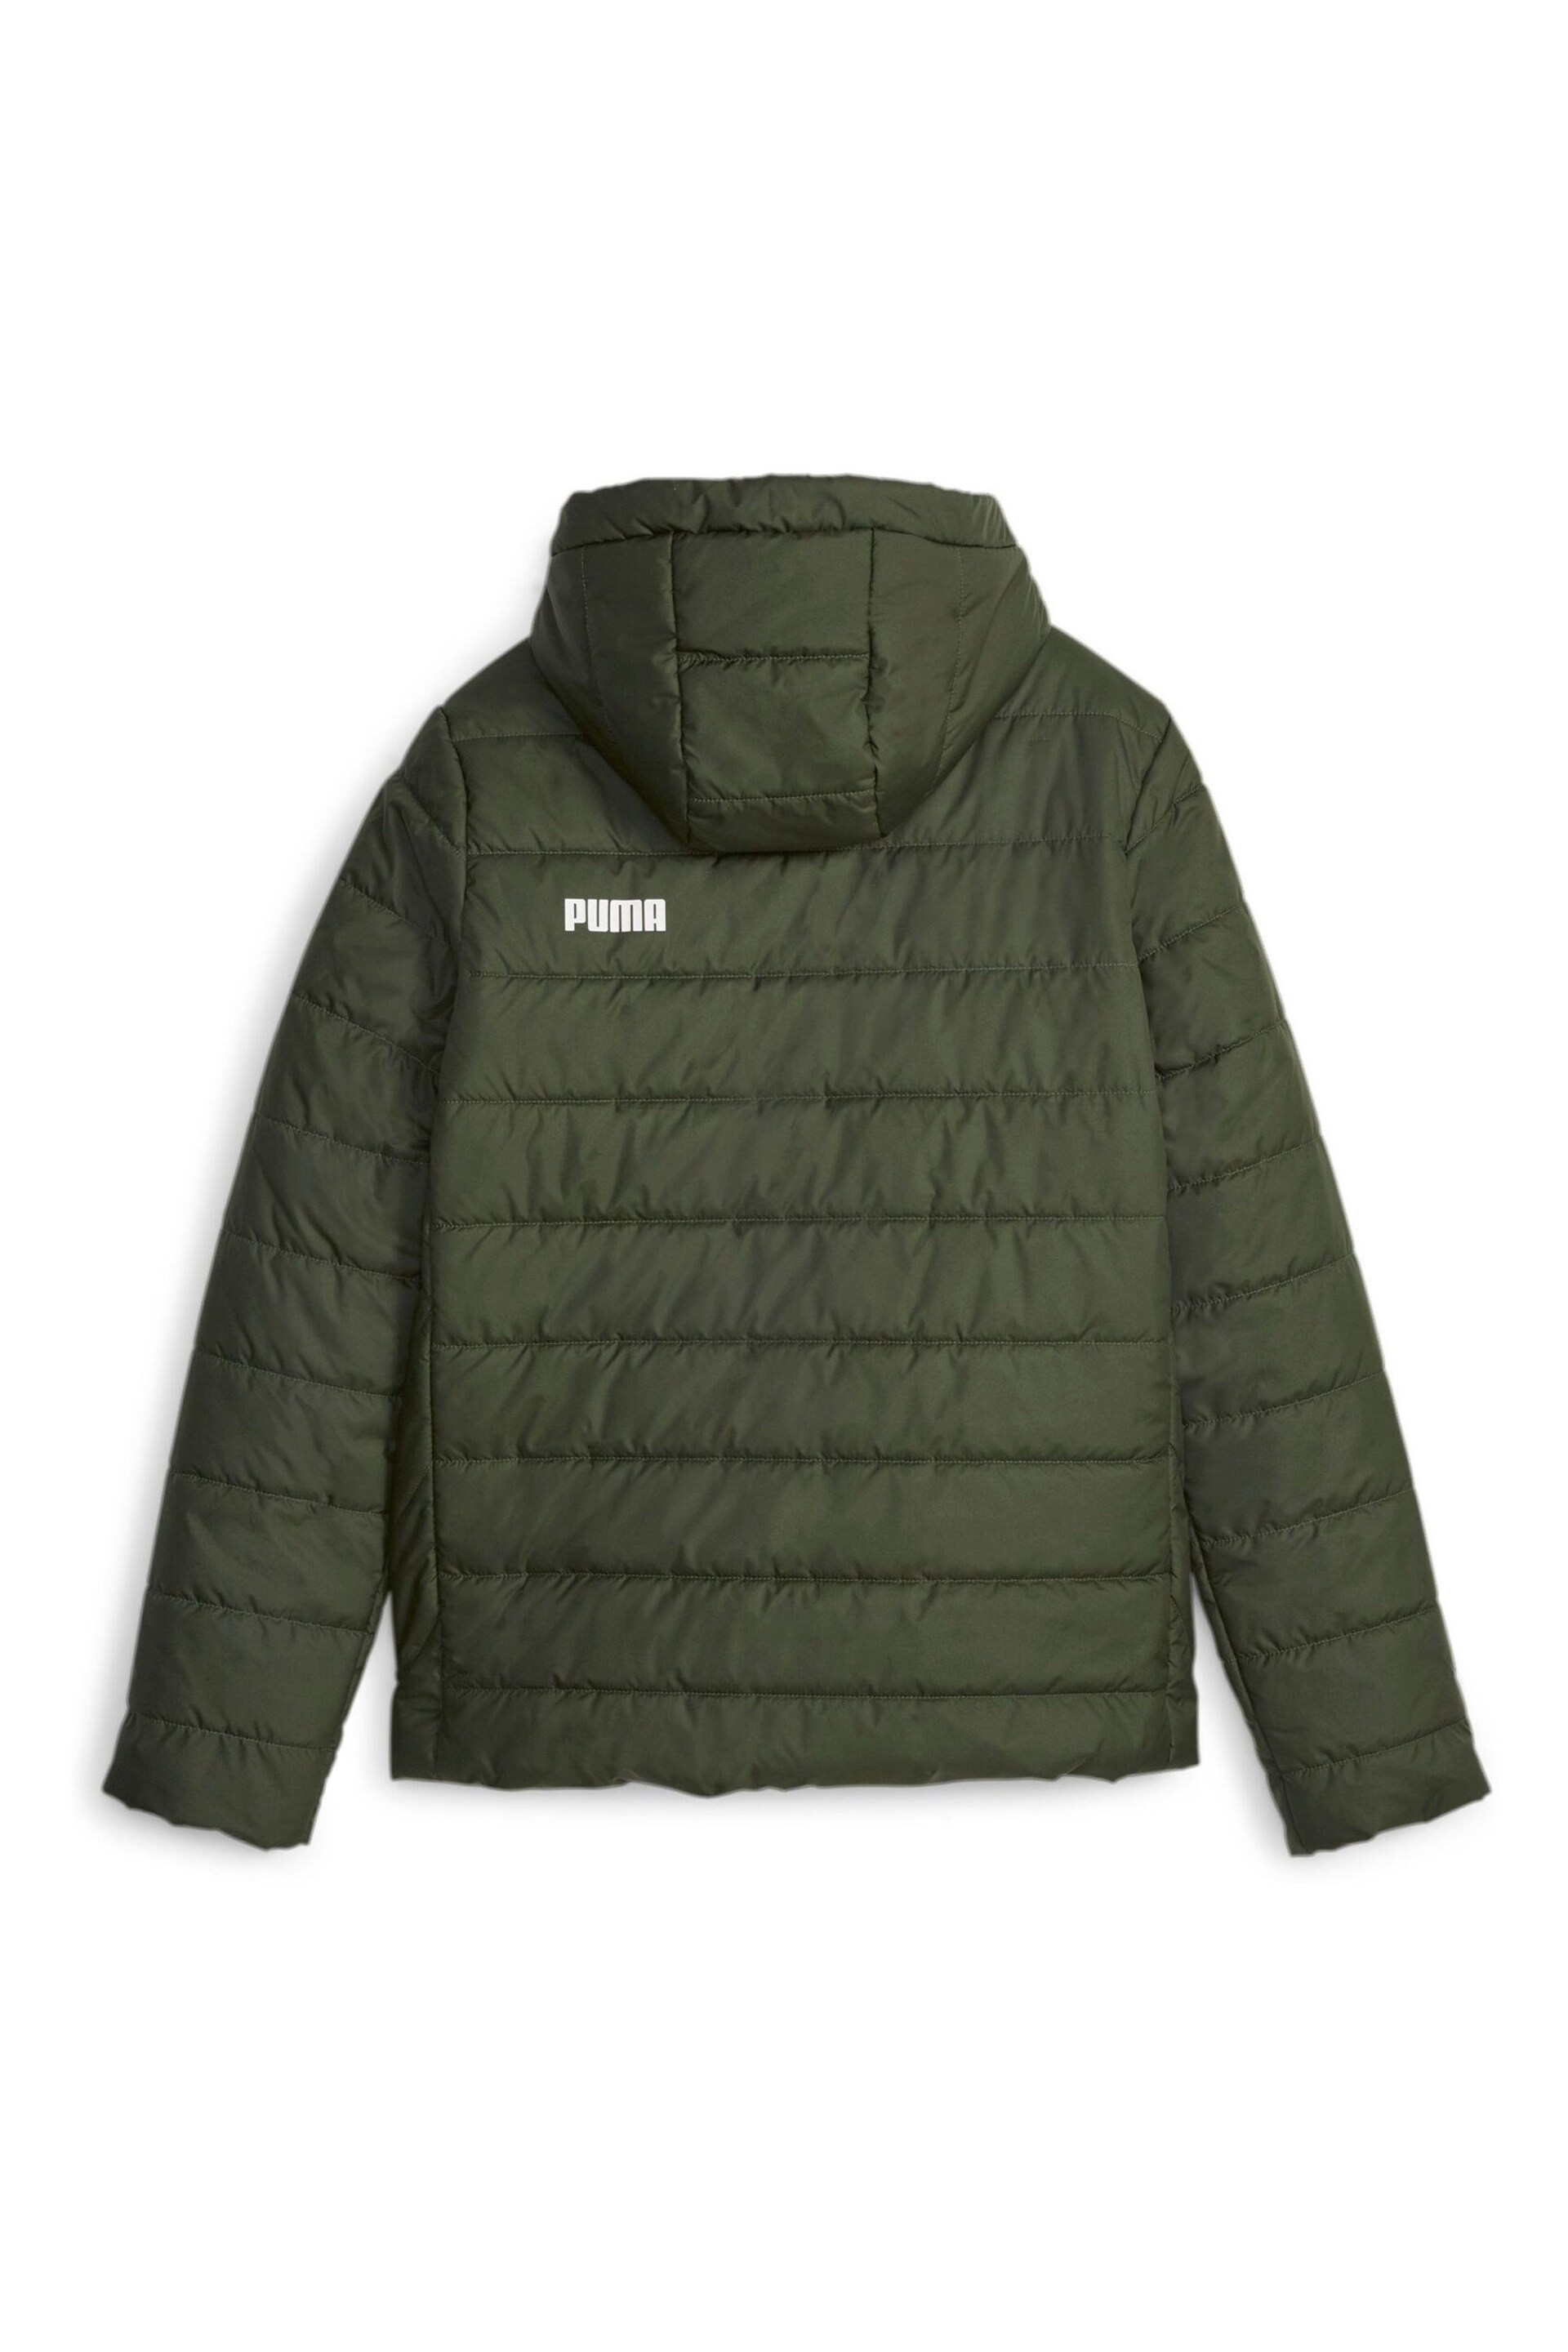 Puma Green Essentials Women Padded Jacket - Image 7 of 7